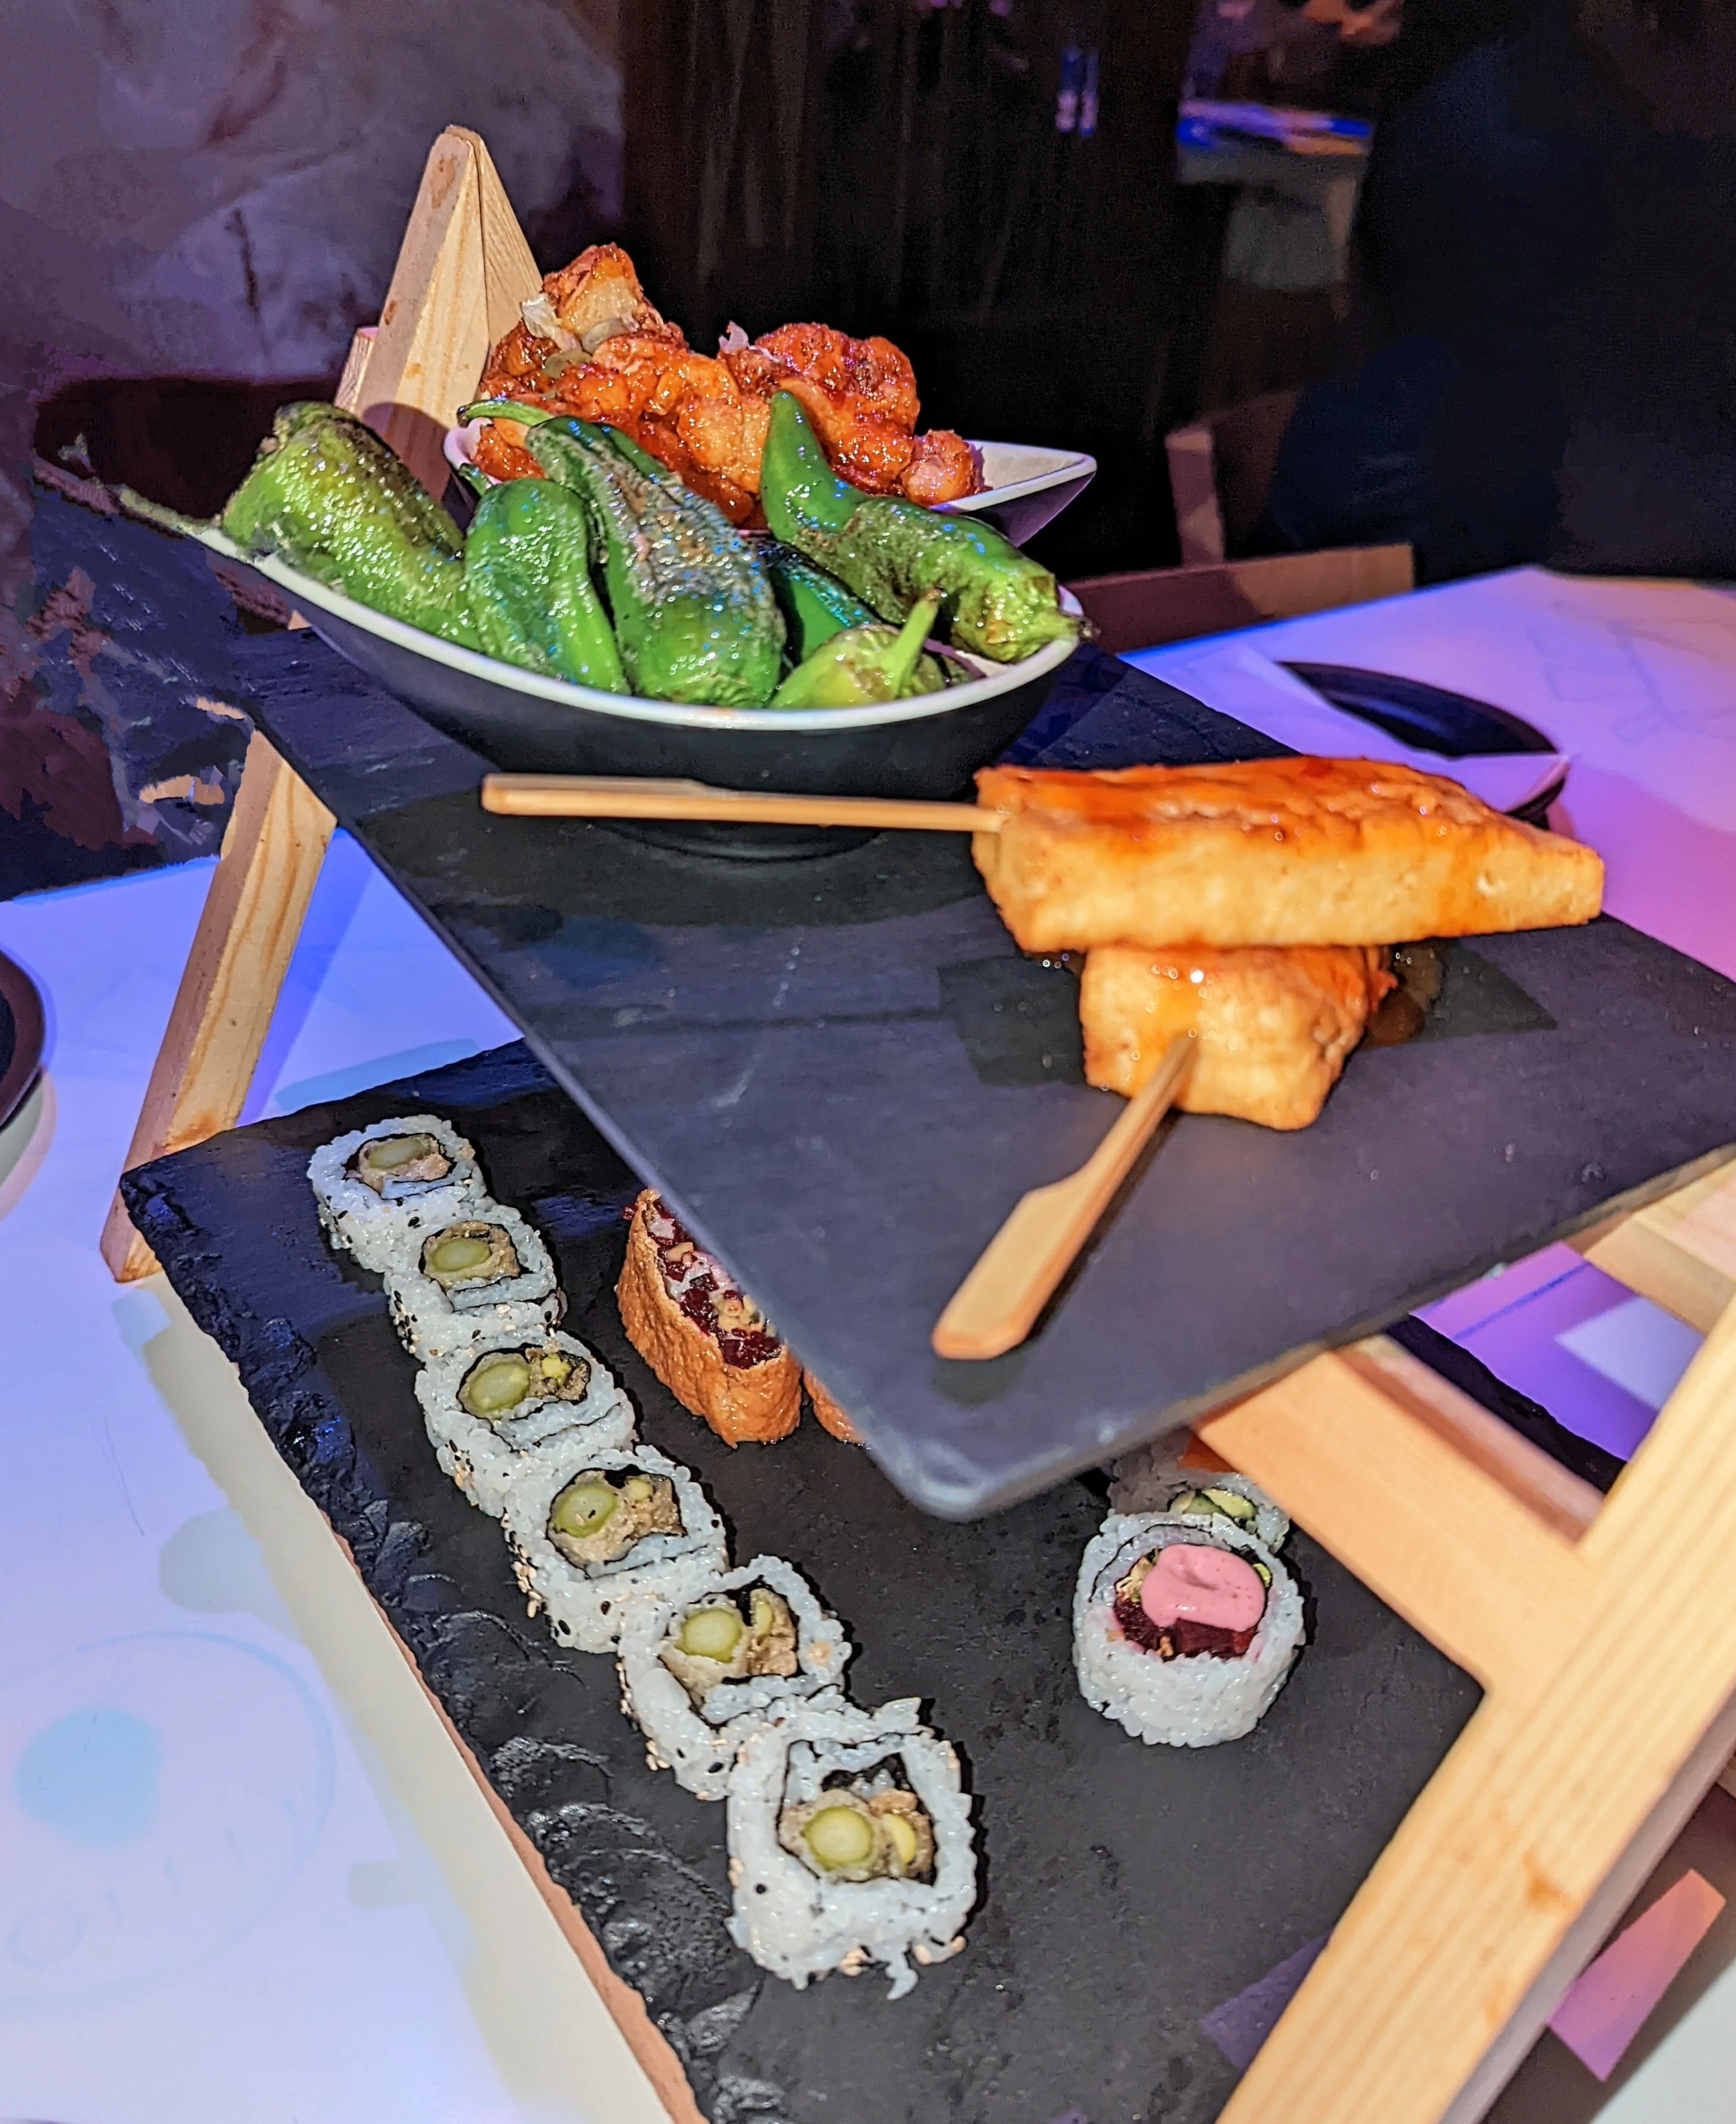 Sushi London